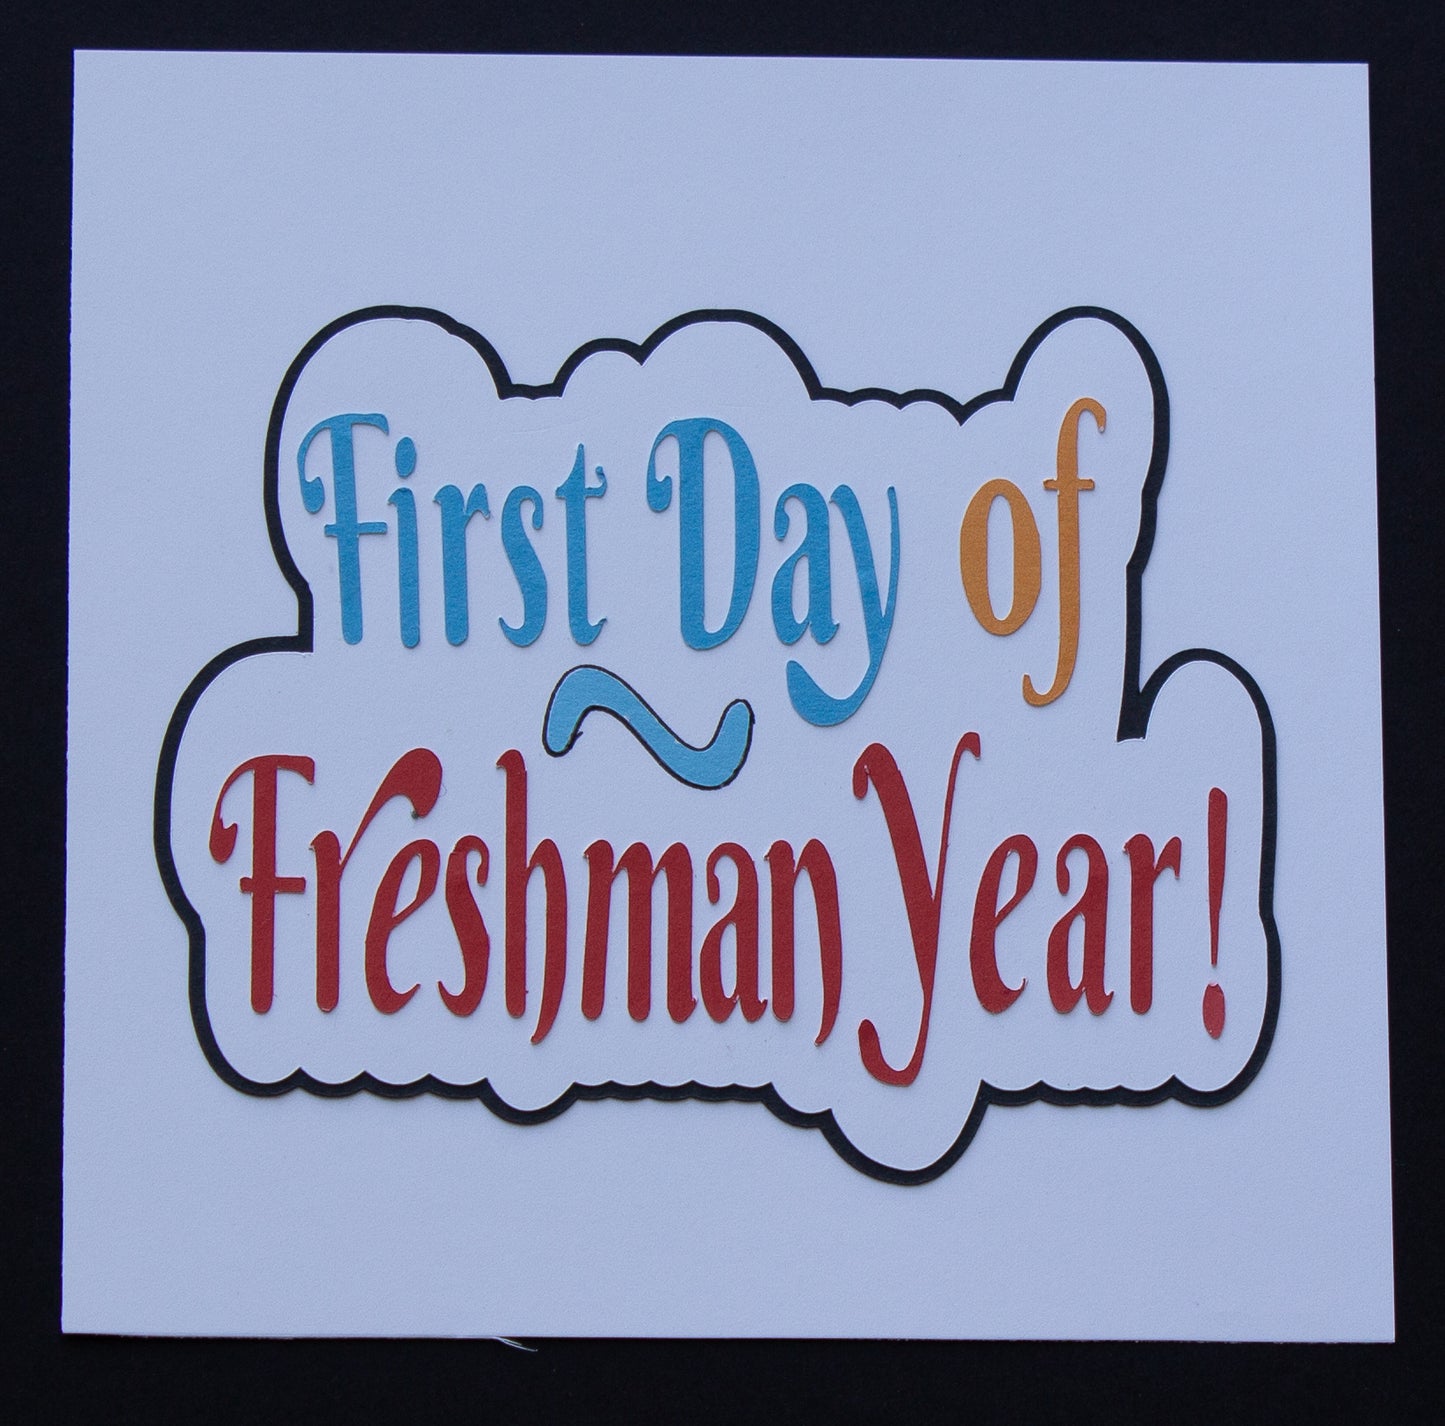 Titles - Freshman Year